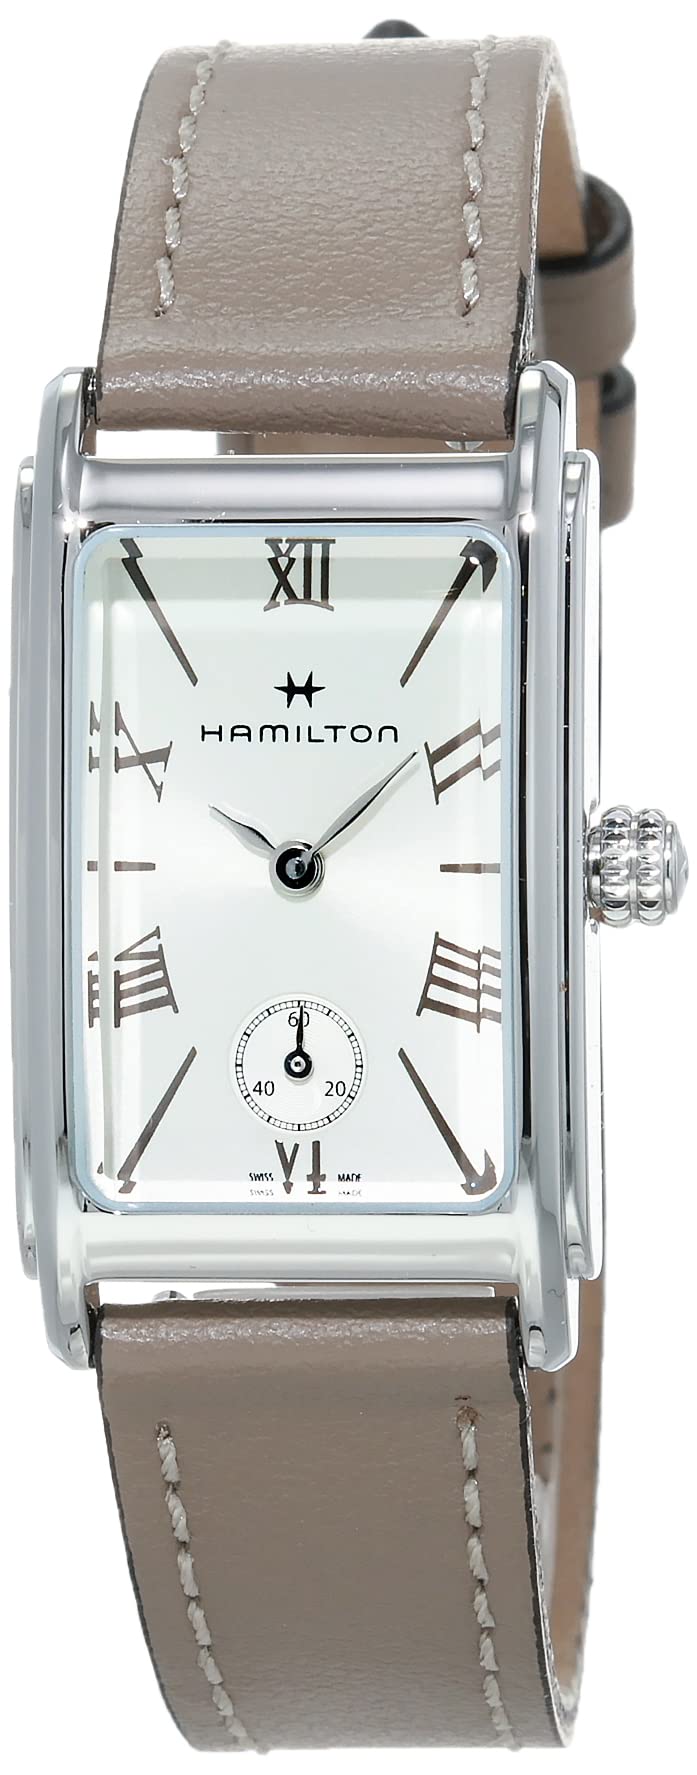 Hamilton Watch American Classic Ardmore Swiss Quartz Watch 18.7mm x 27mm Case, Silver Dial, Beige Leather Strap (Model: H11221514)